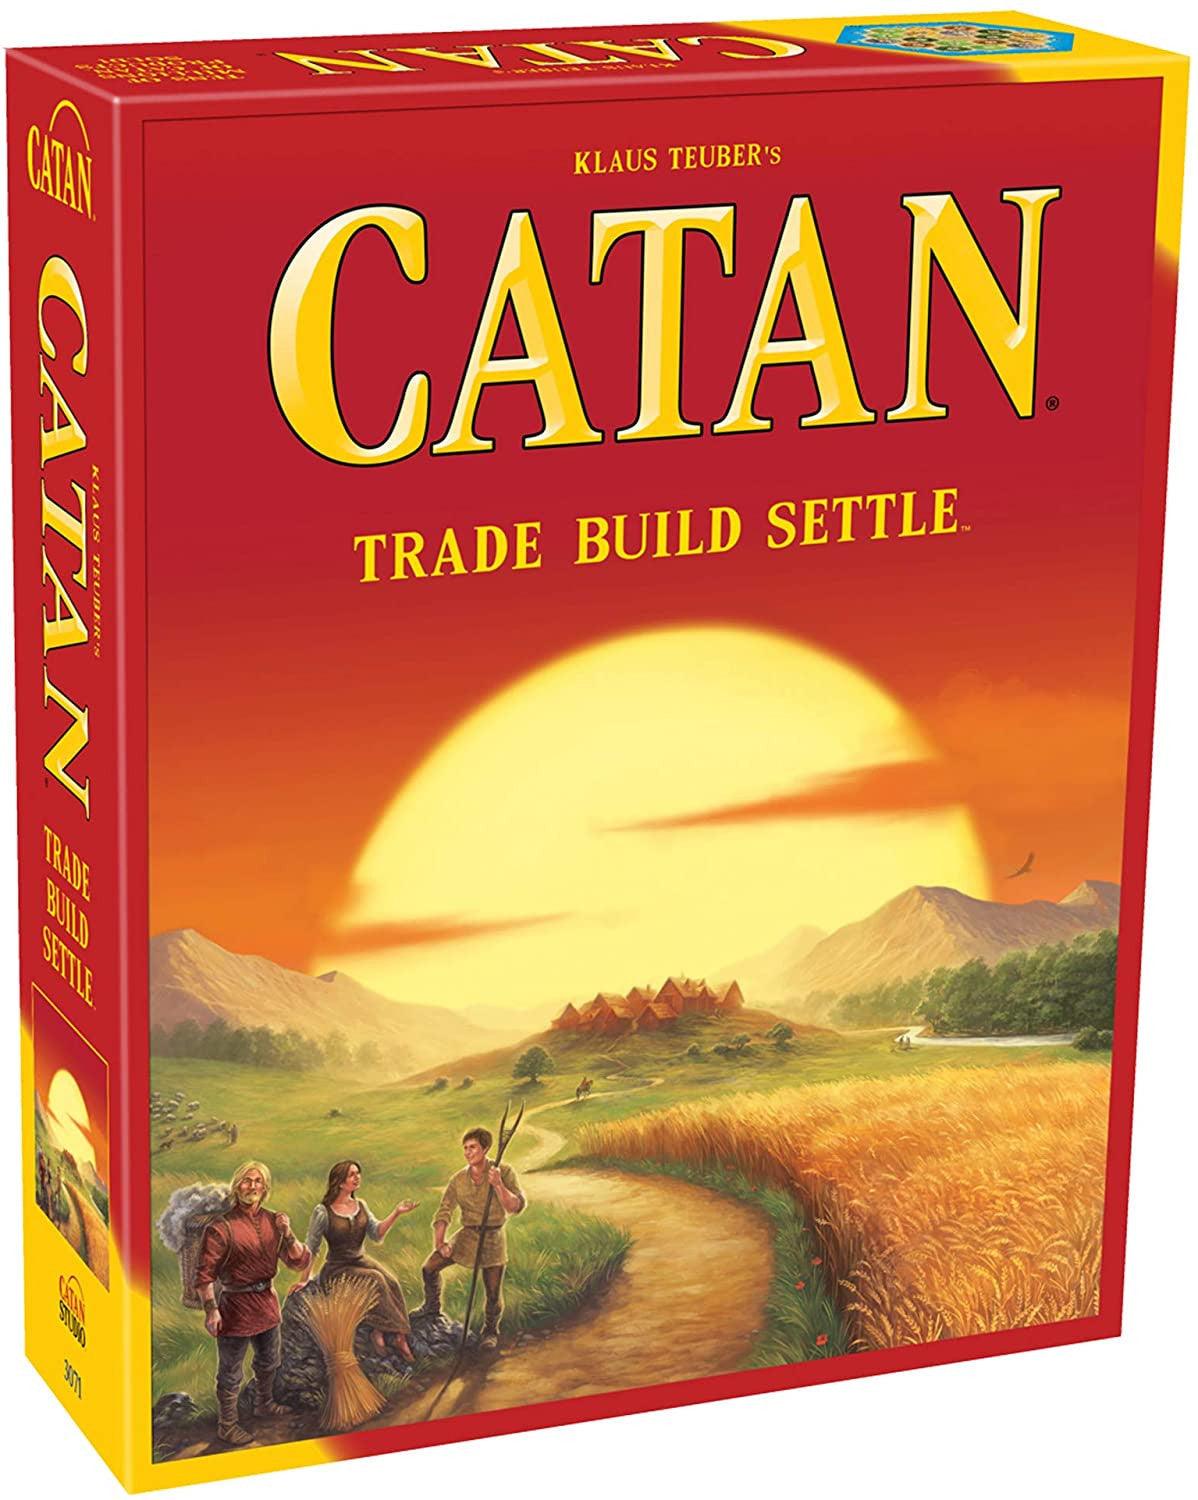 VR-23409 Catan Trade Build Settle - Catan Studio - Titan Pop Culture